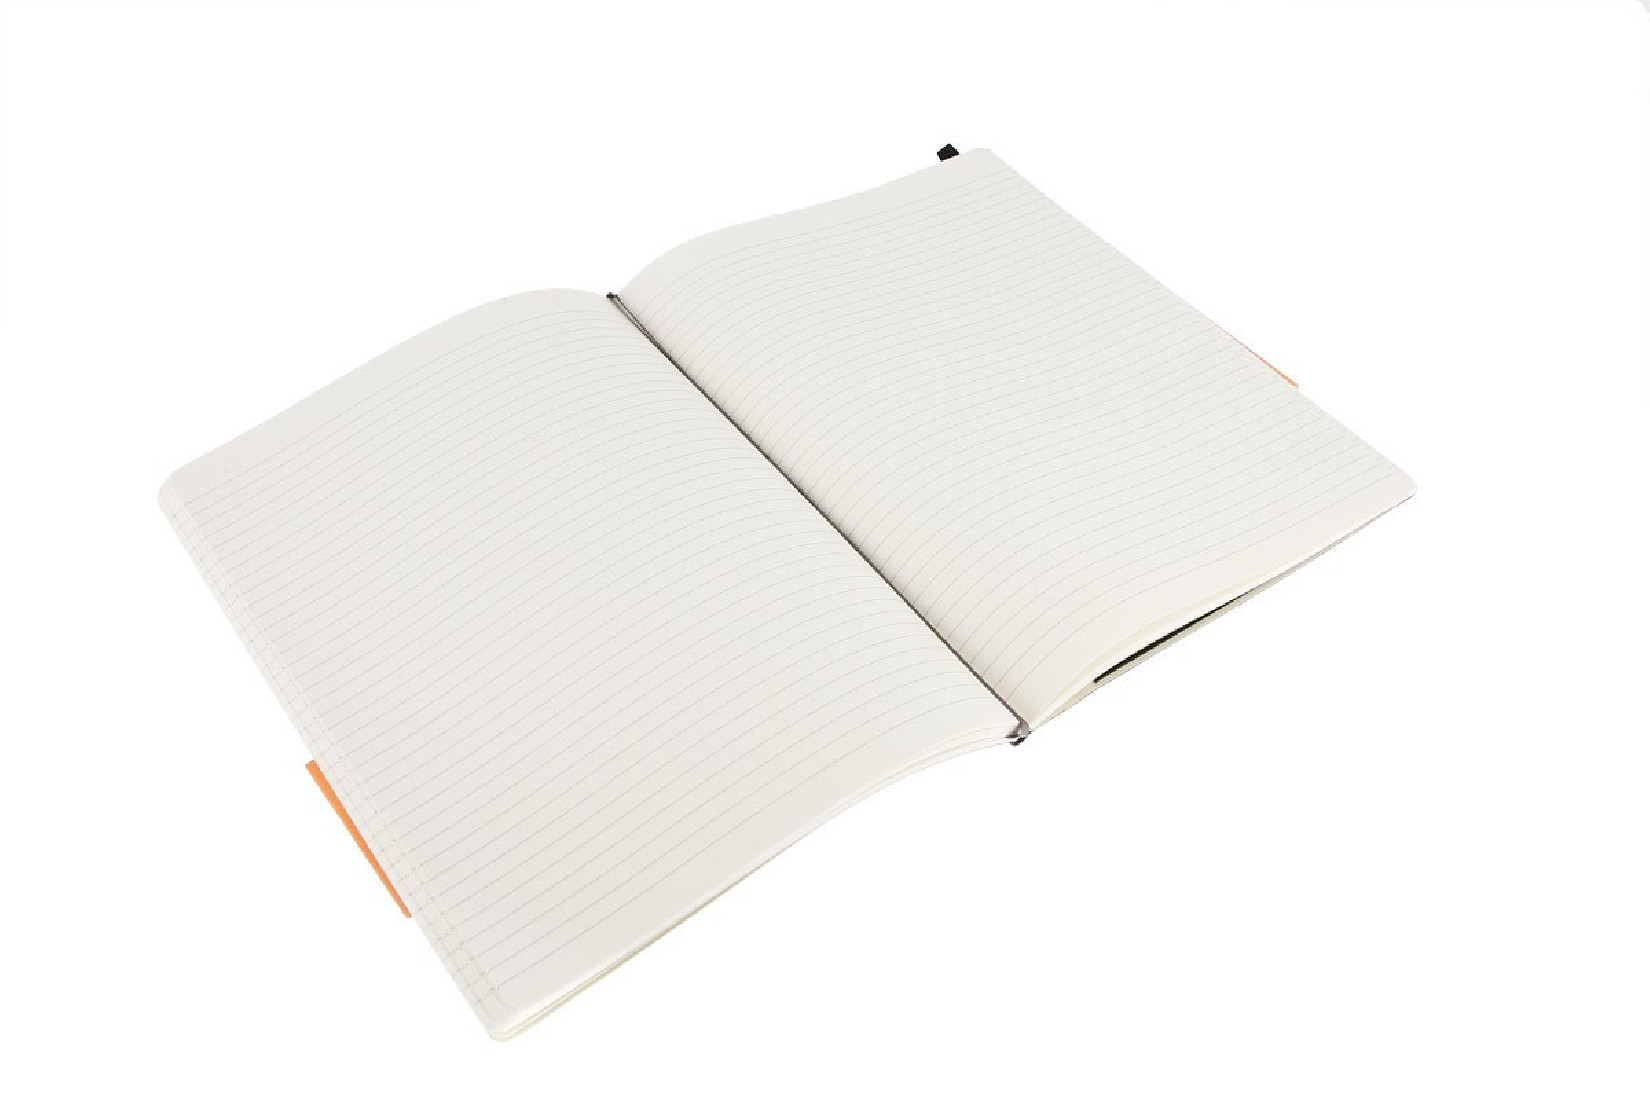 Notebook Extra Large 19x25 Ruled Black Soft Cover Moleskine